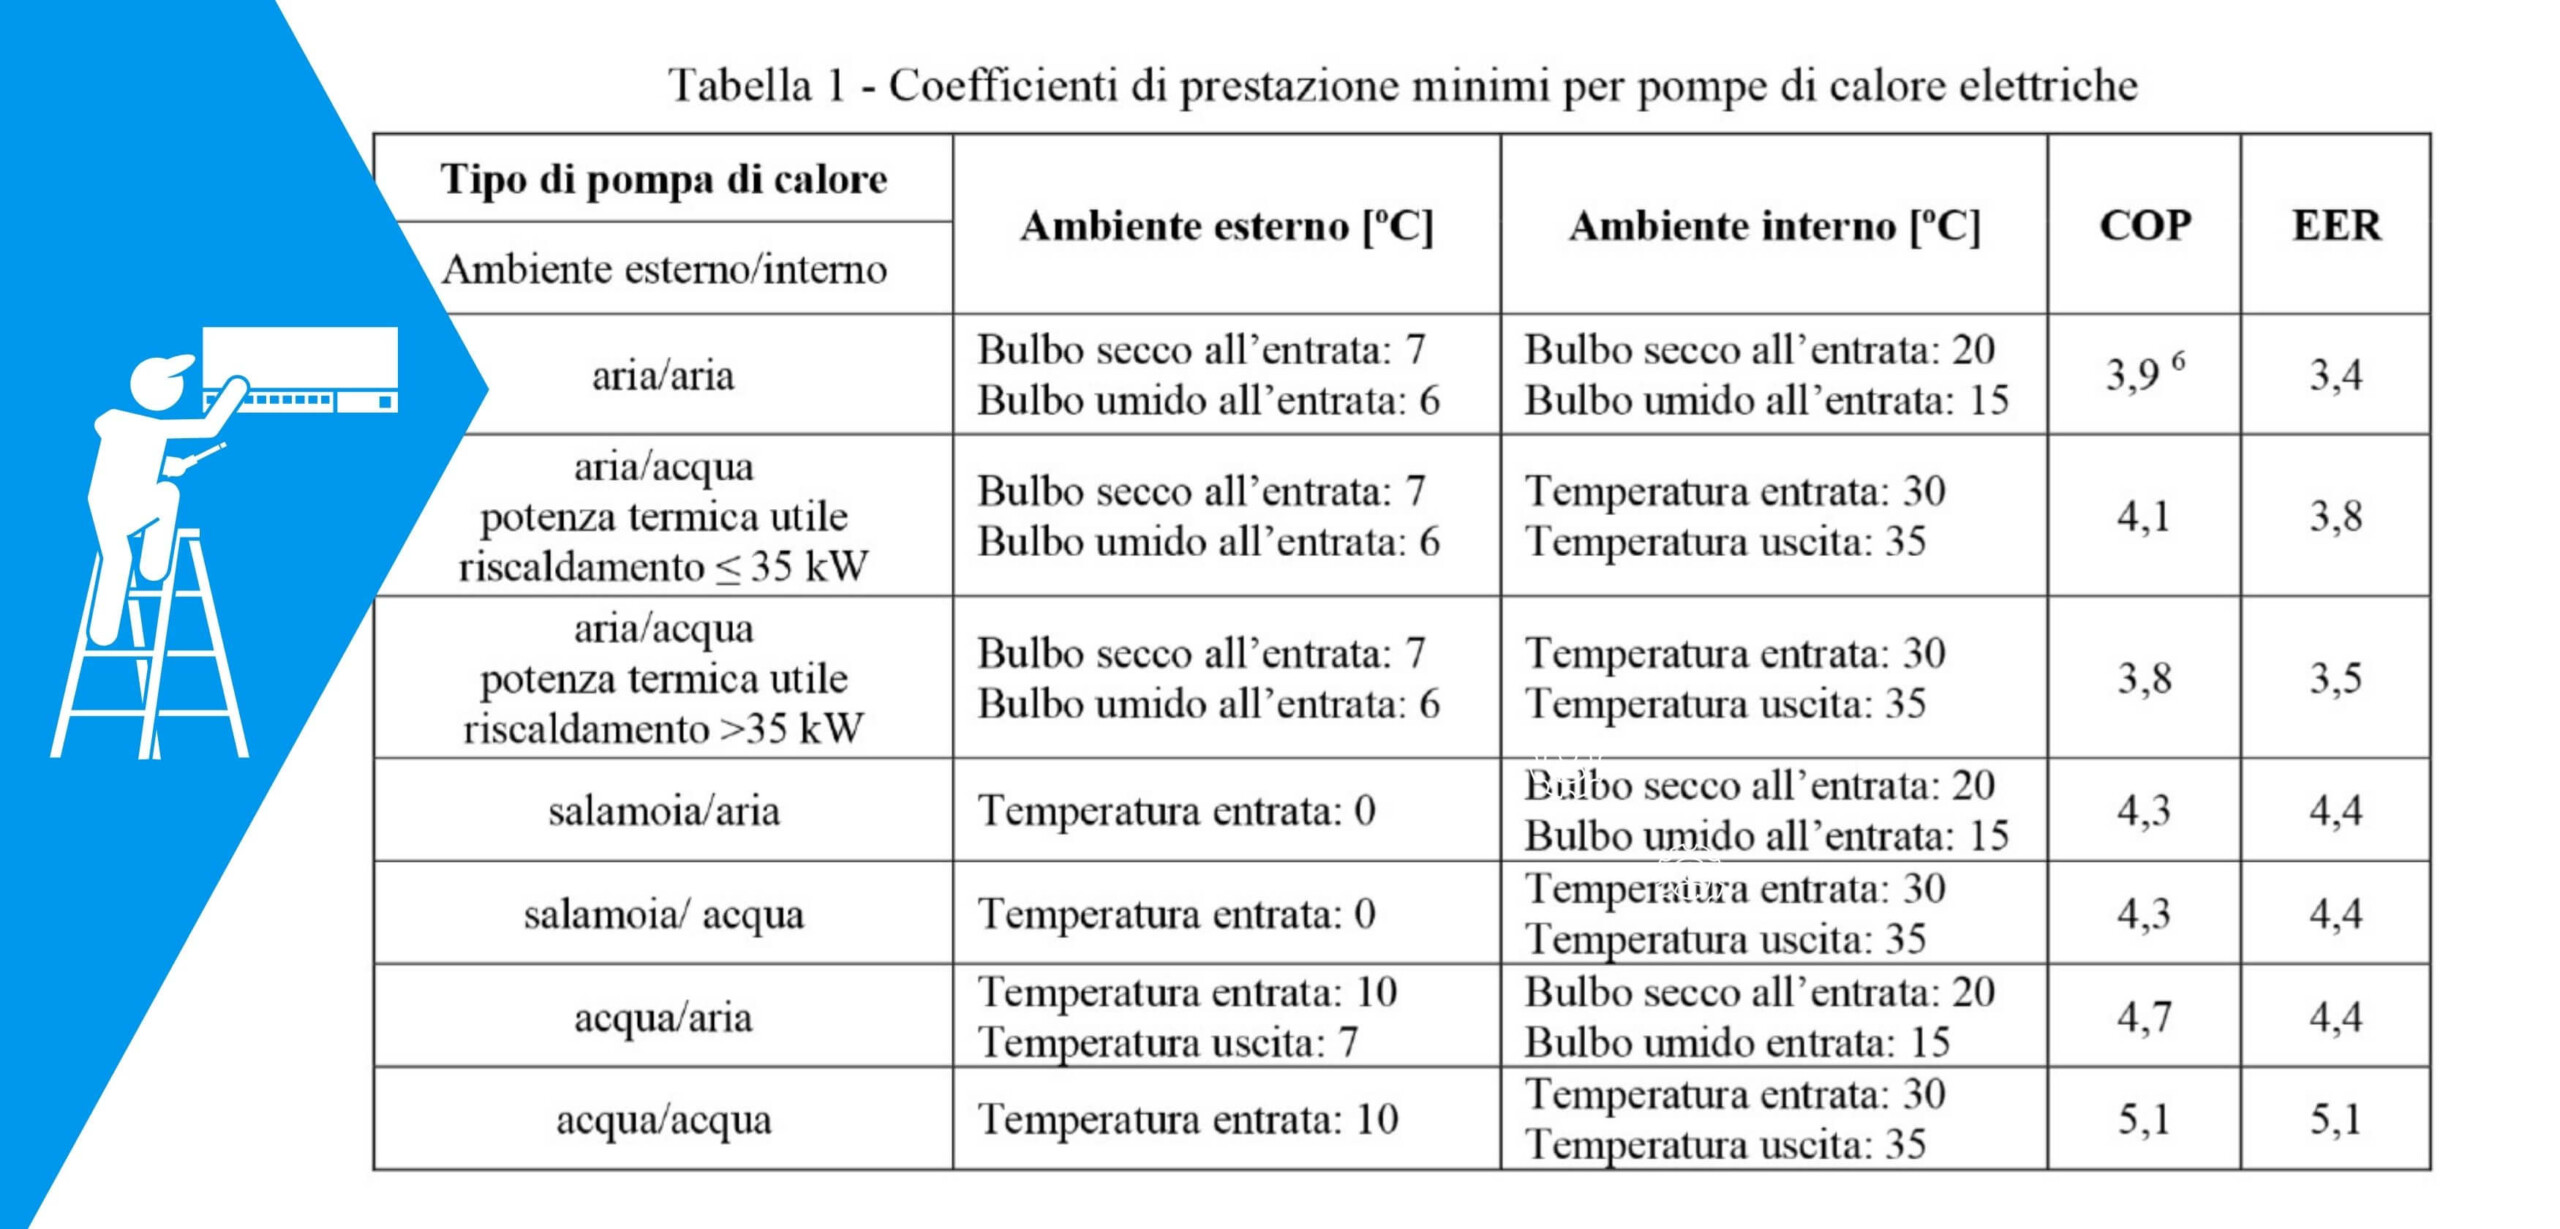 EER-COP Coefficienti di prestazione minimi per pompe di calore elettriche